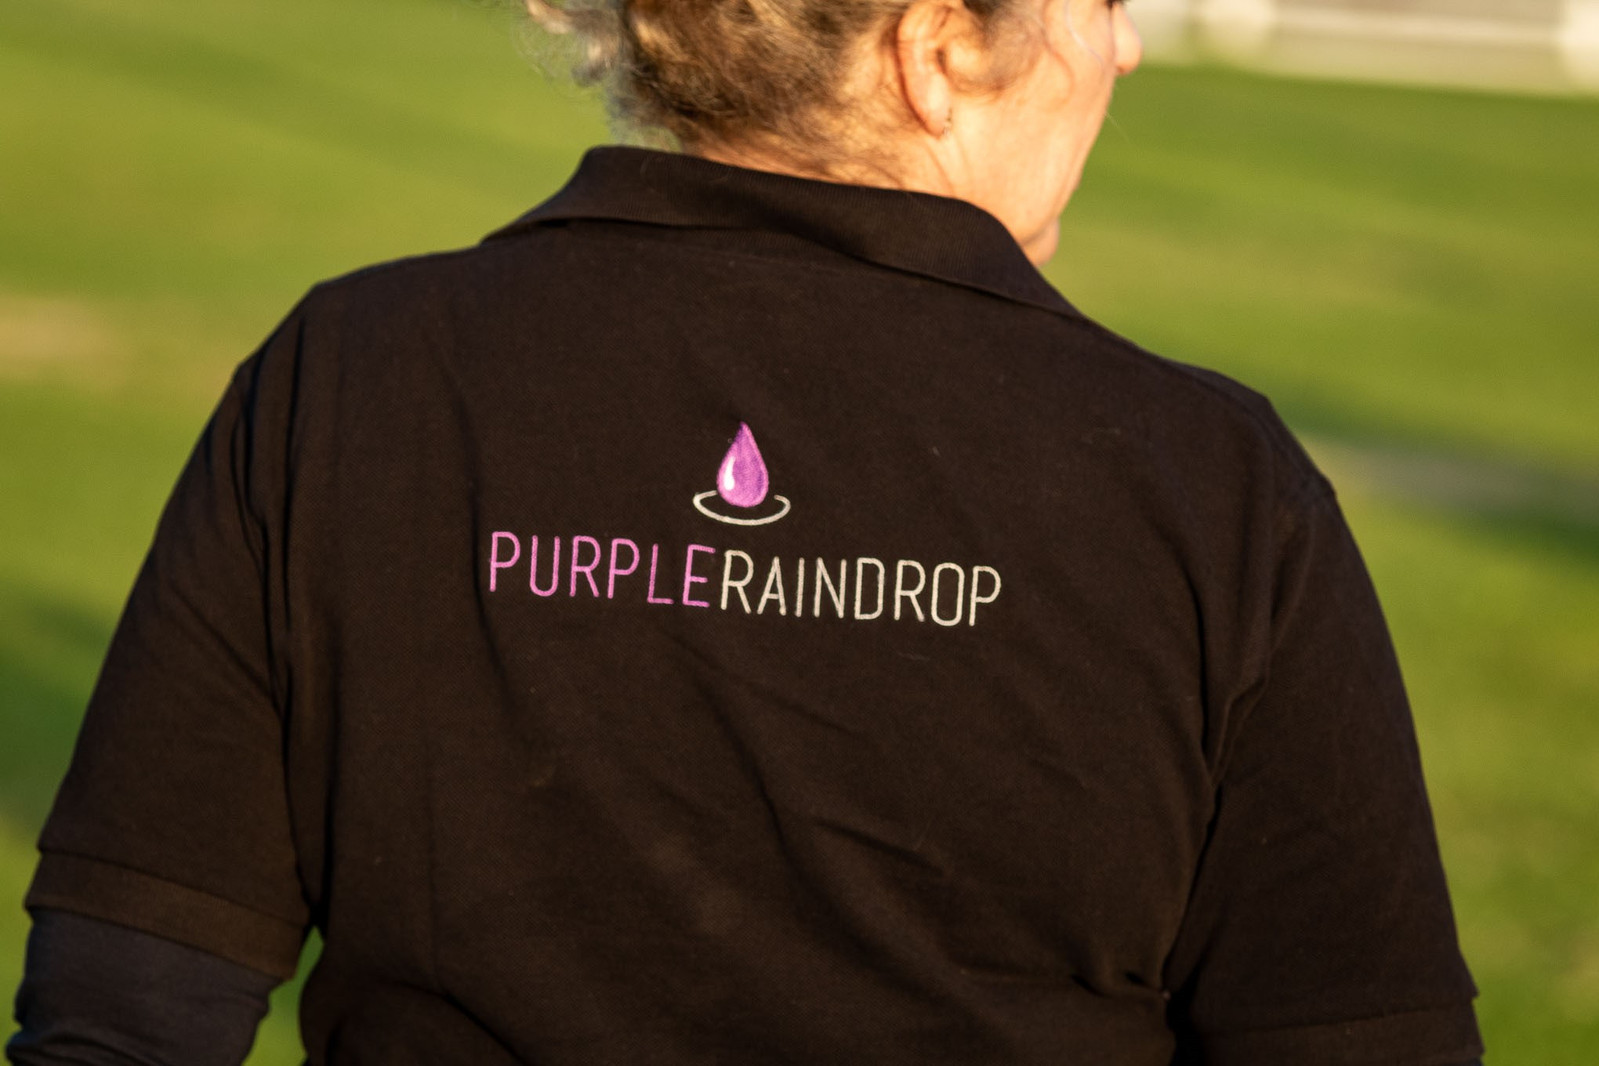 Purple Raindrop gets it done! 